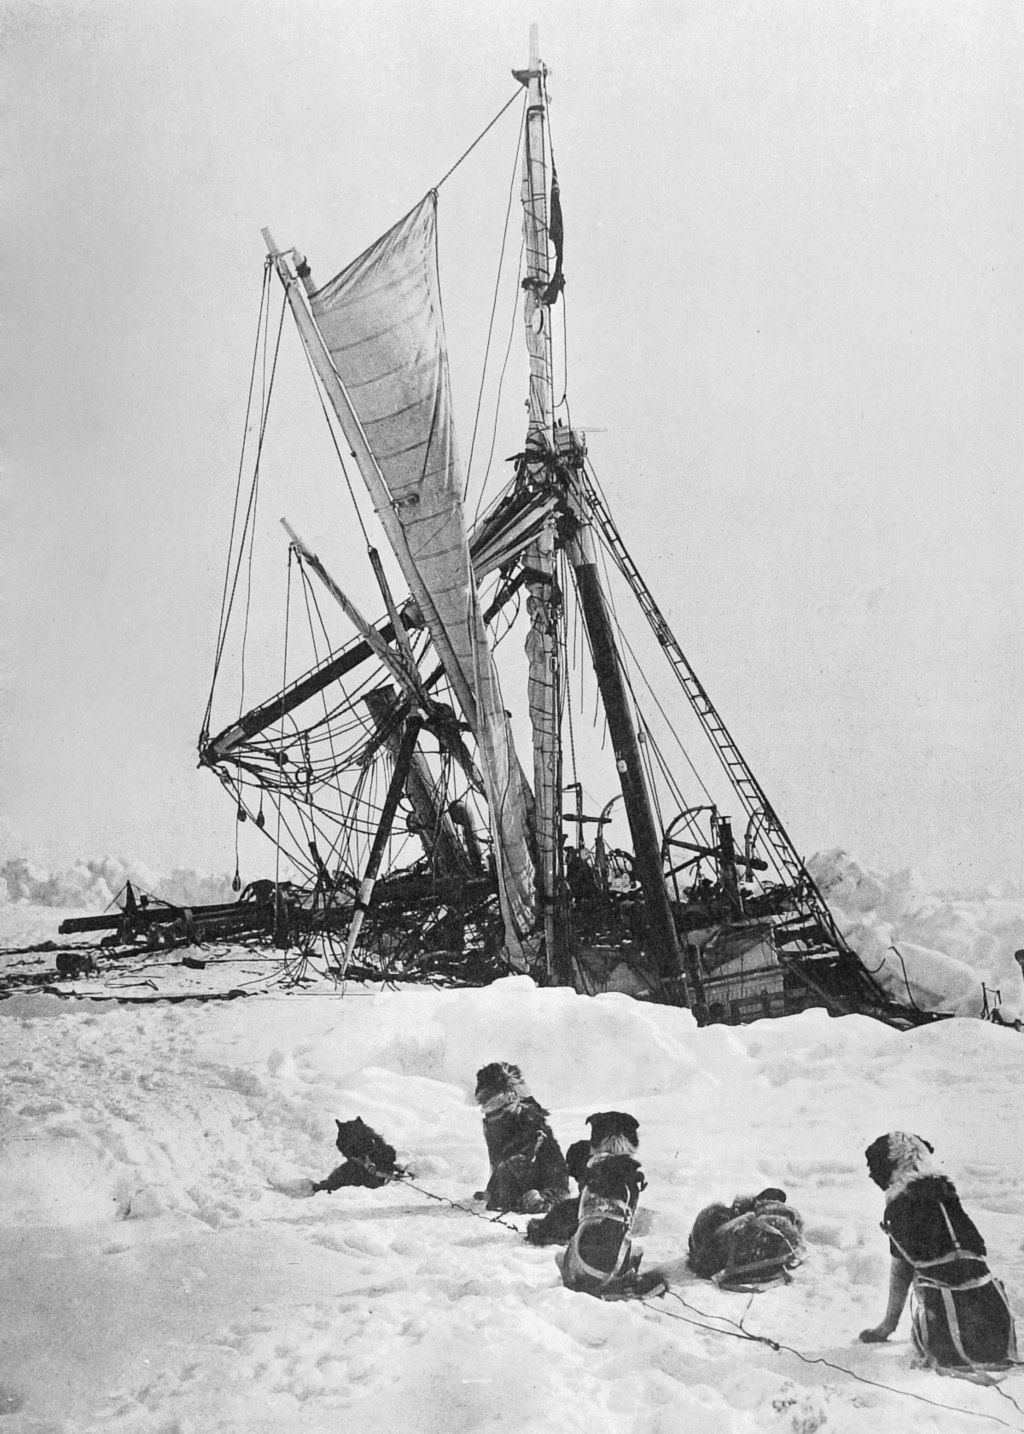 endurance (1912 ship)